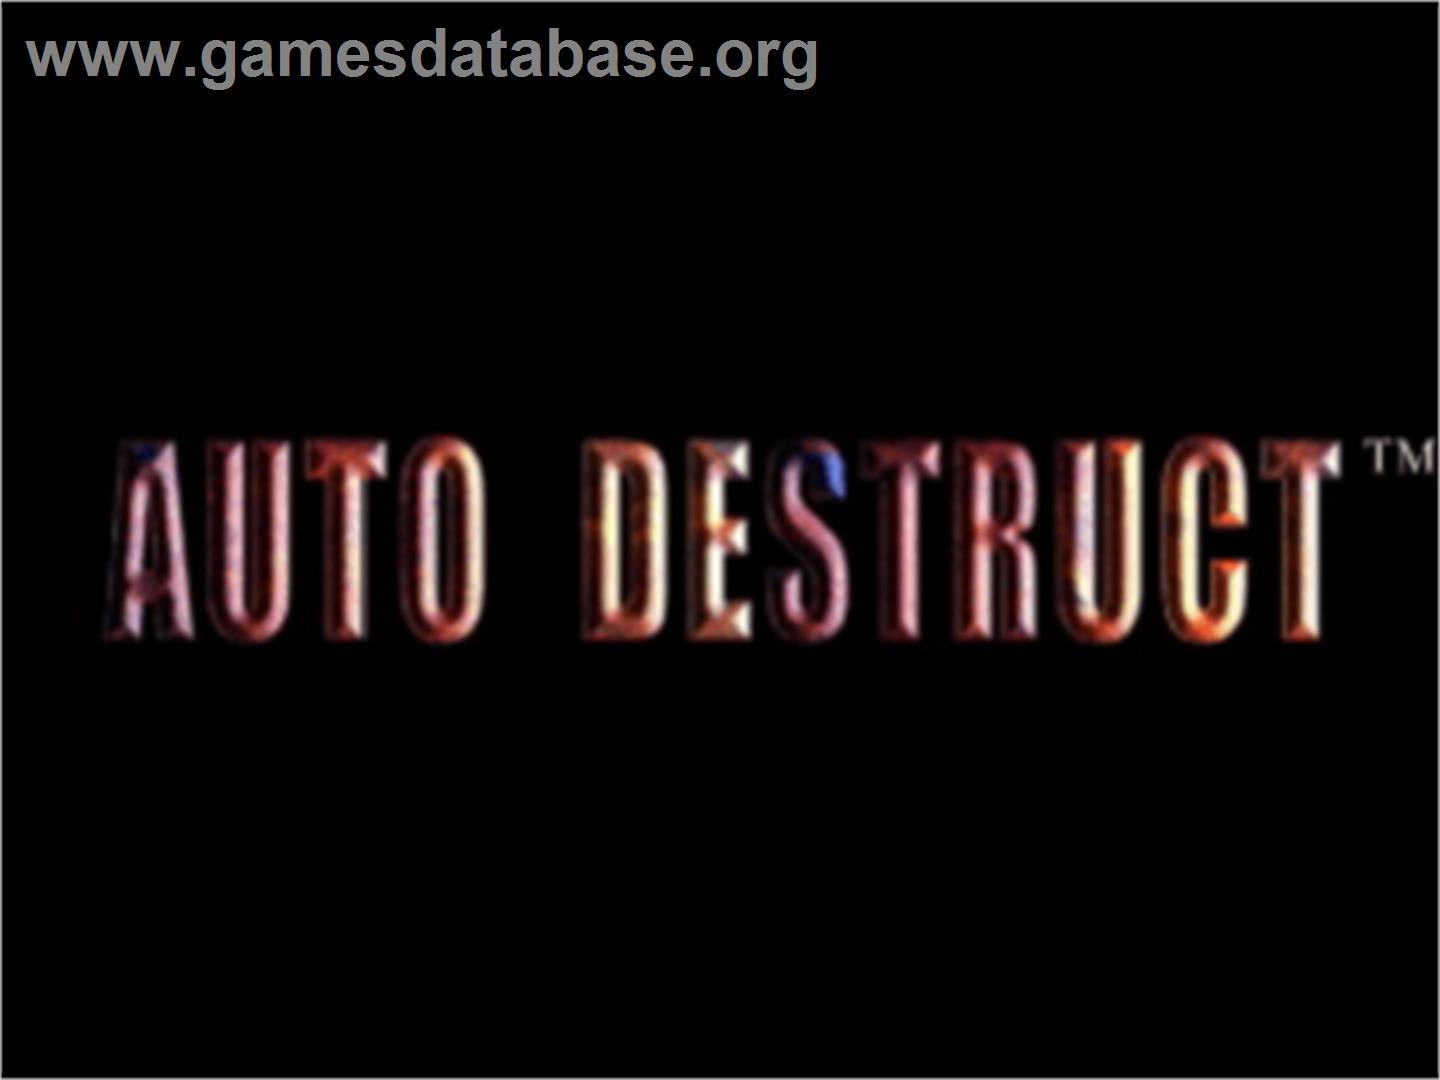 Auto Destruct - Sony Playstation - Artwork - Title Screen